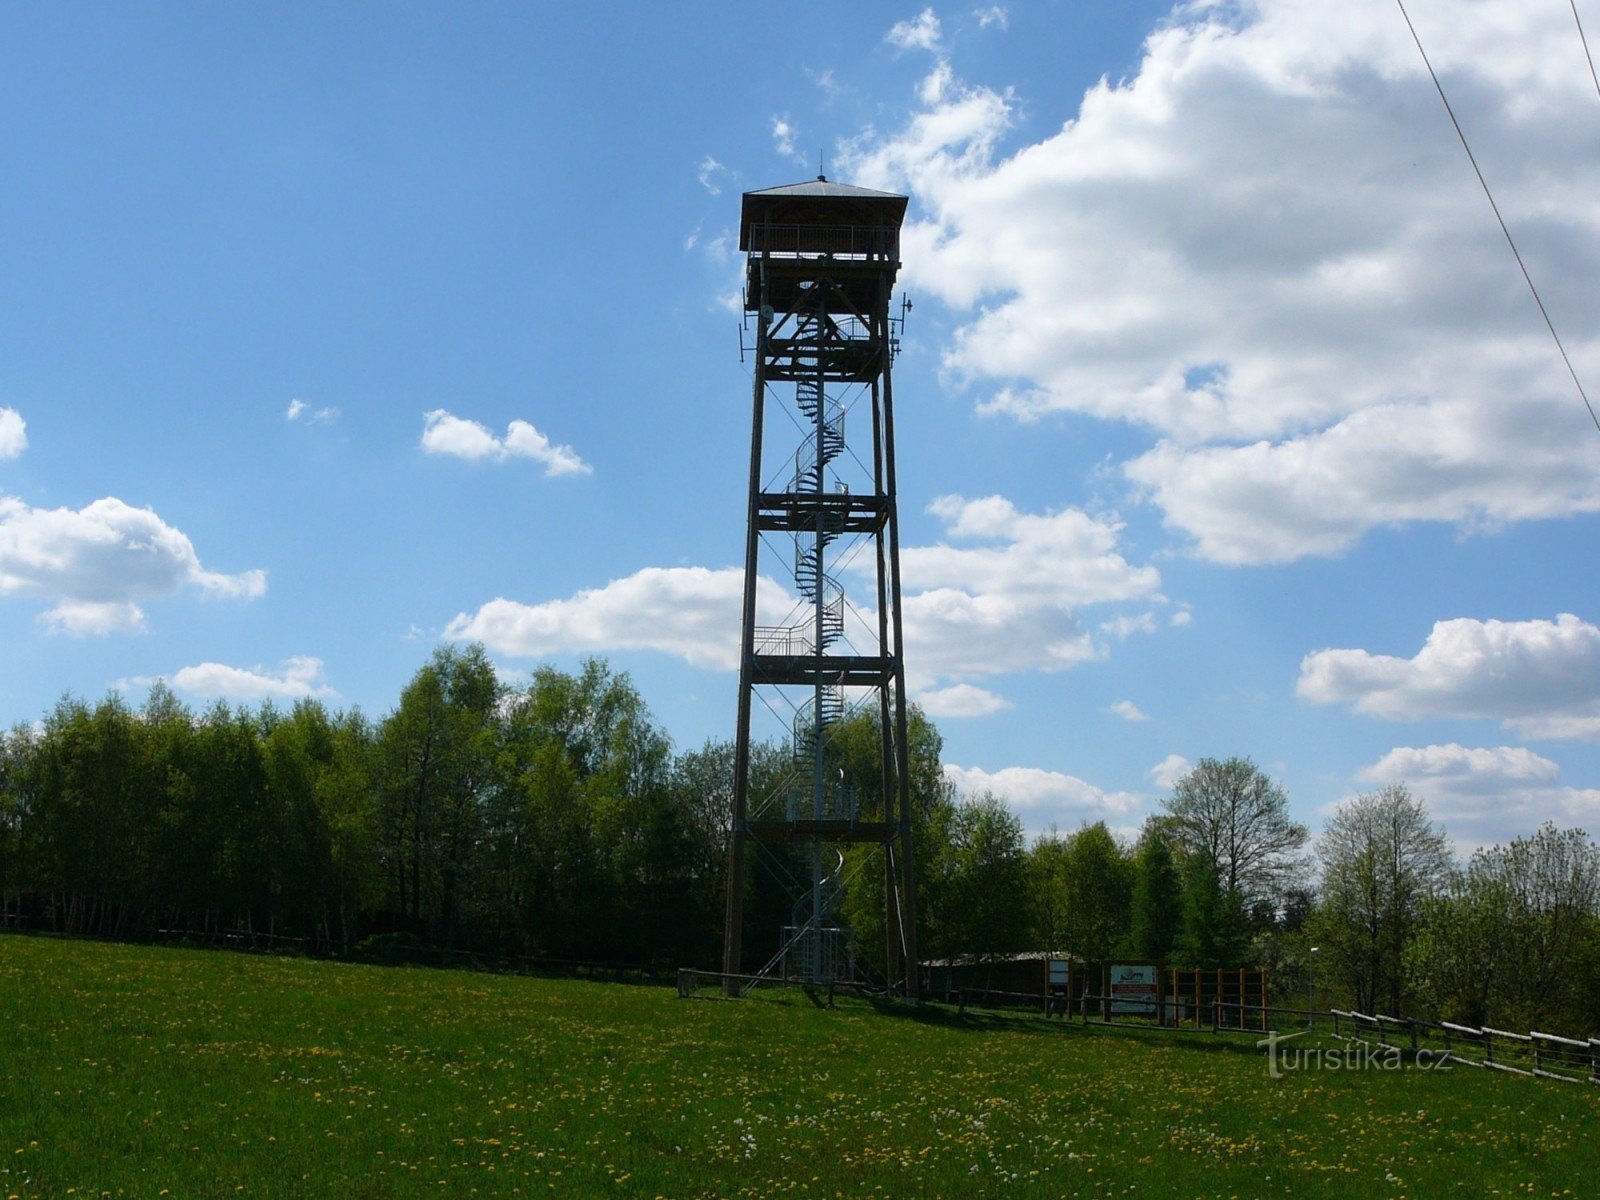 Terezka u Proseč observation tower